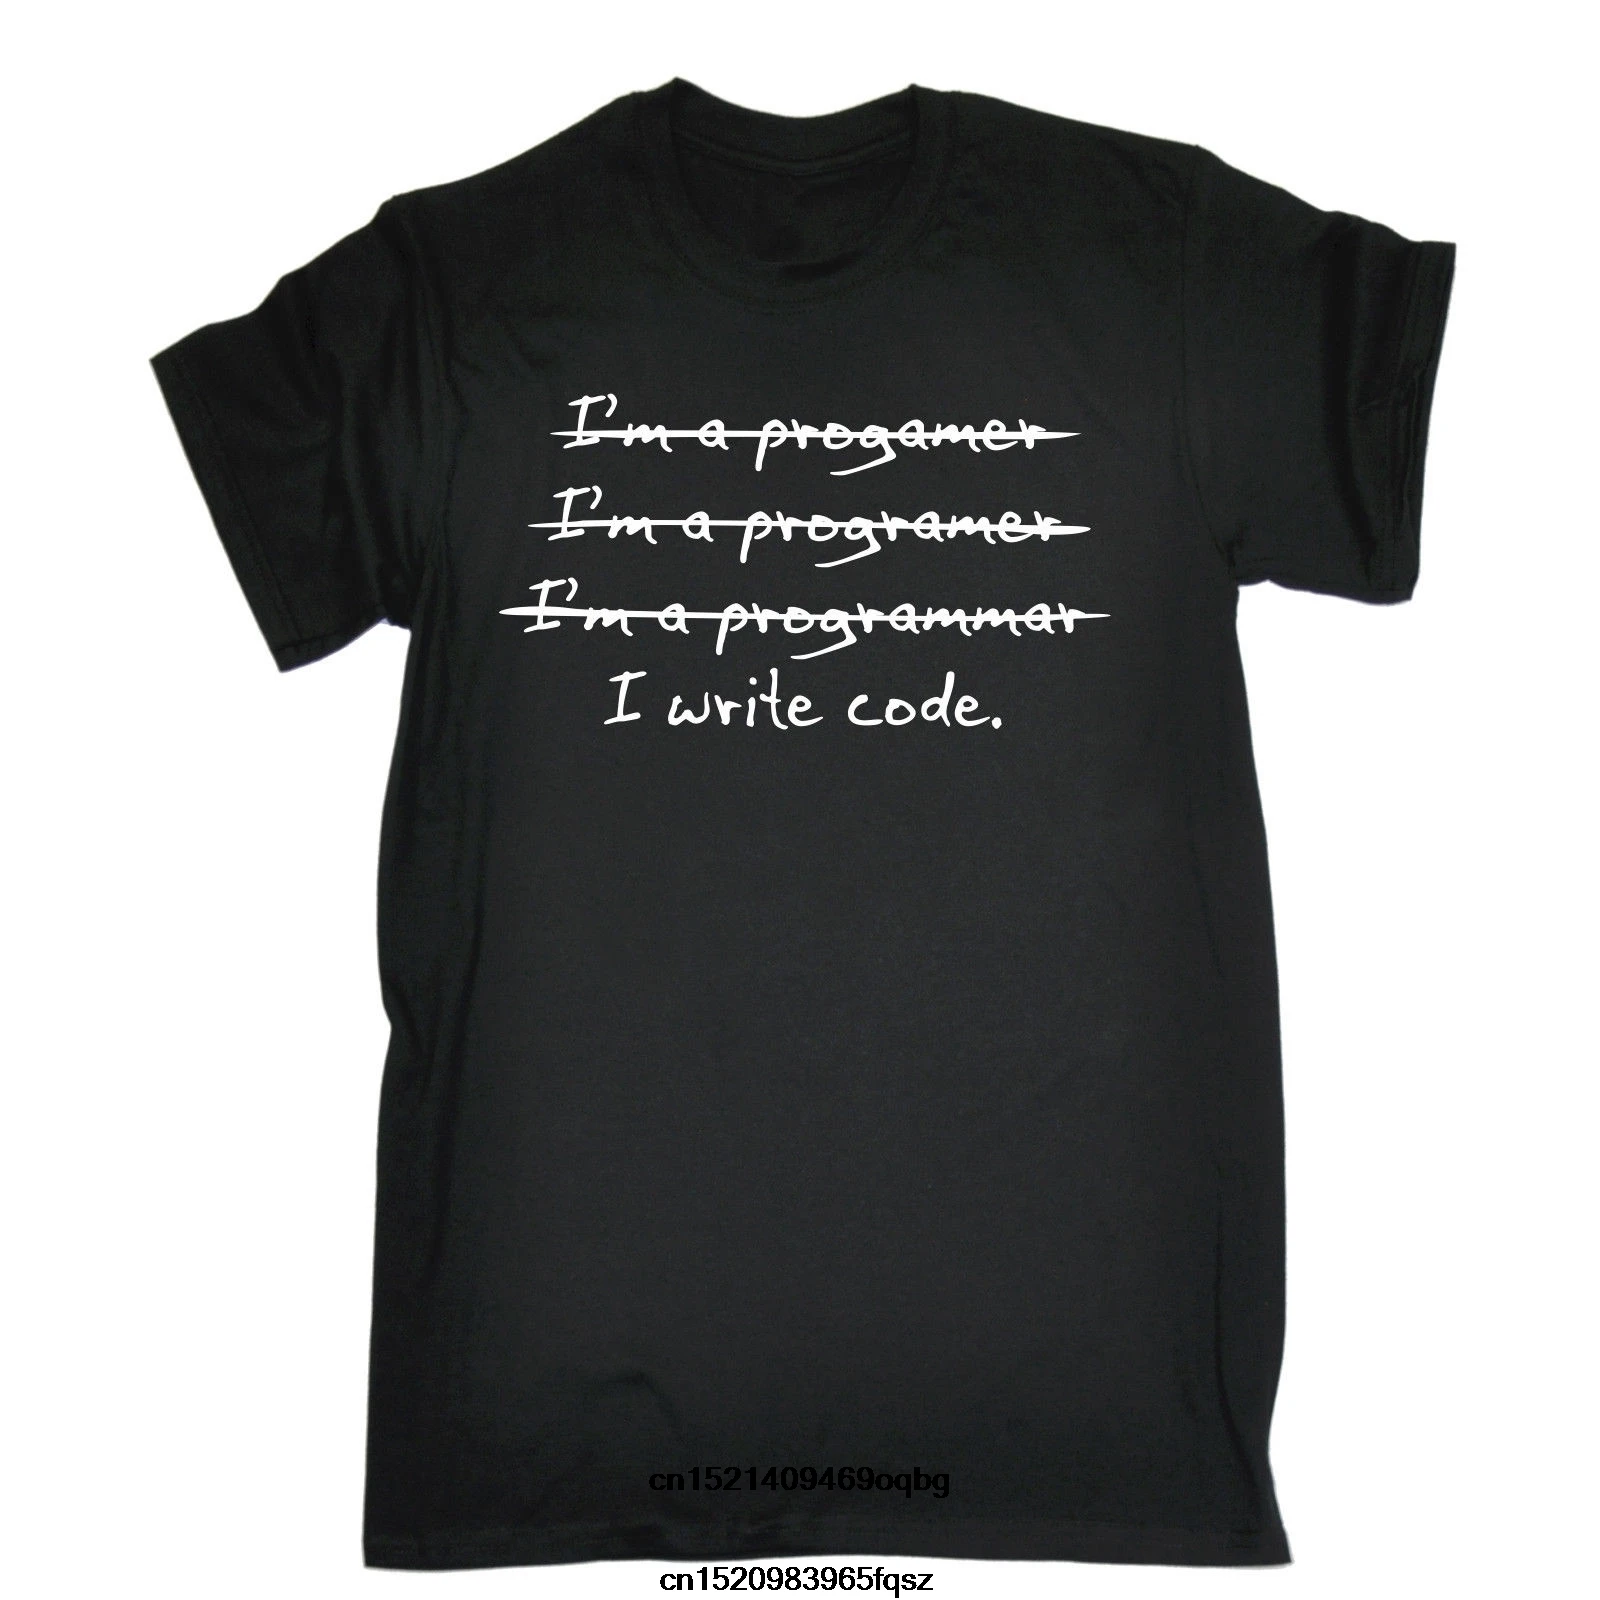 

I Write Code MENS T-SHIRT Birthday Funny Slogan Programmer Geek Nerd Gift Round Collar Short Sleeve T Shirts Top Tee